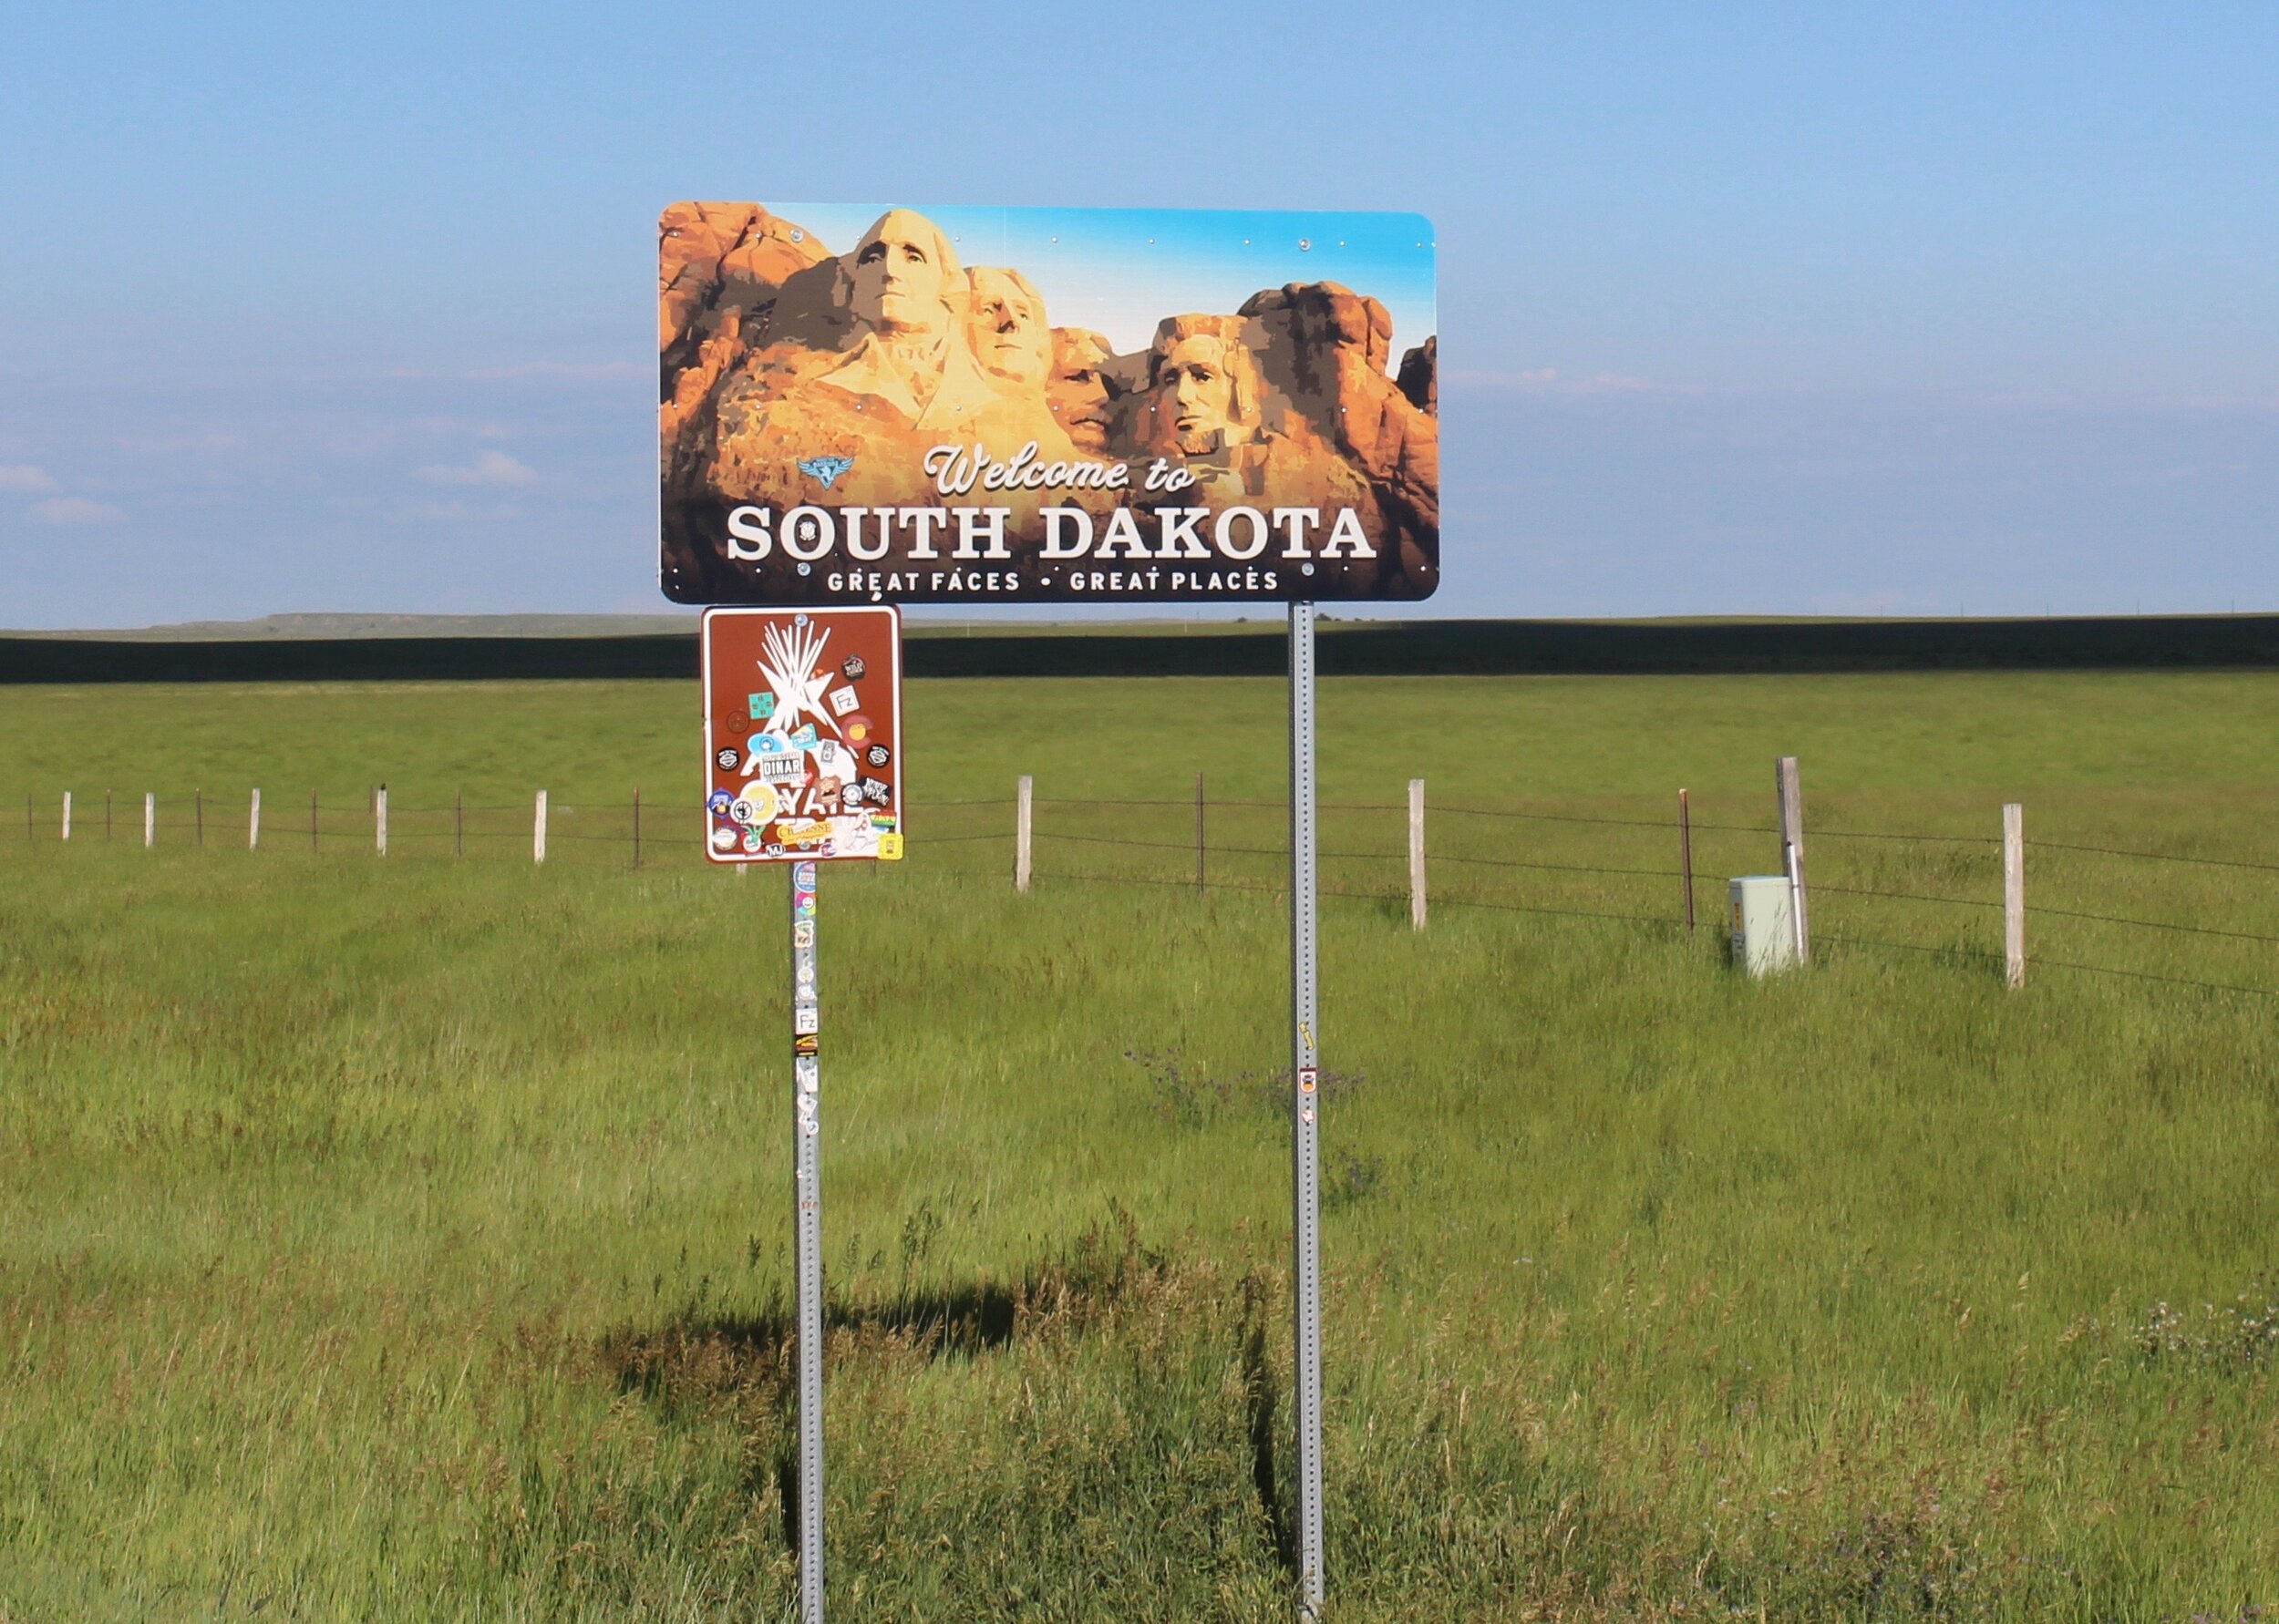 South Dakota: One RV, 4 nights, 6 People-My FIRST of (hopefully) many RV trips: